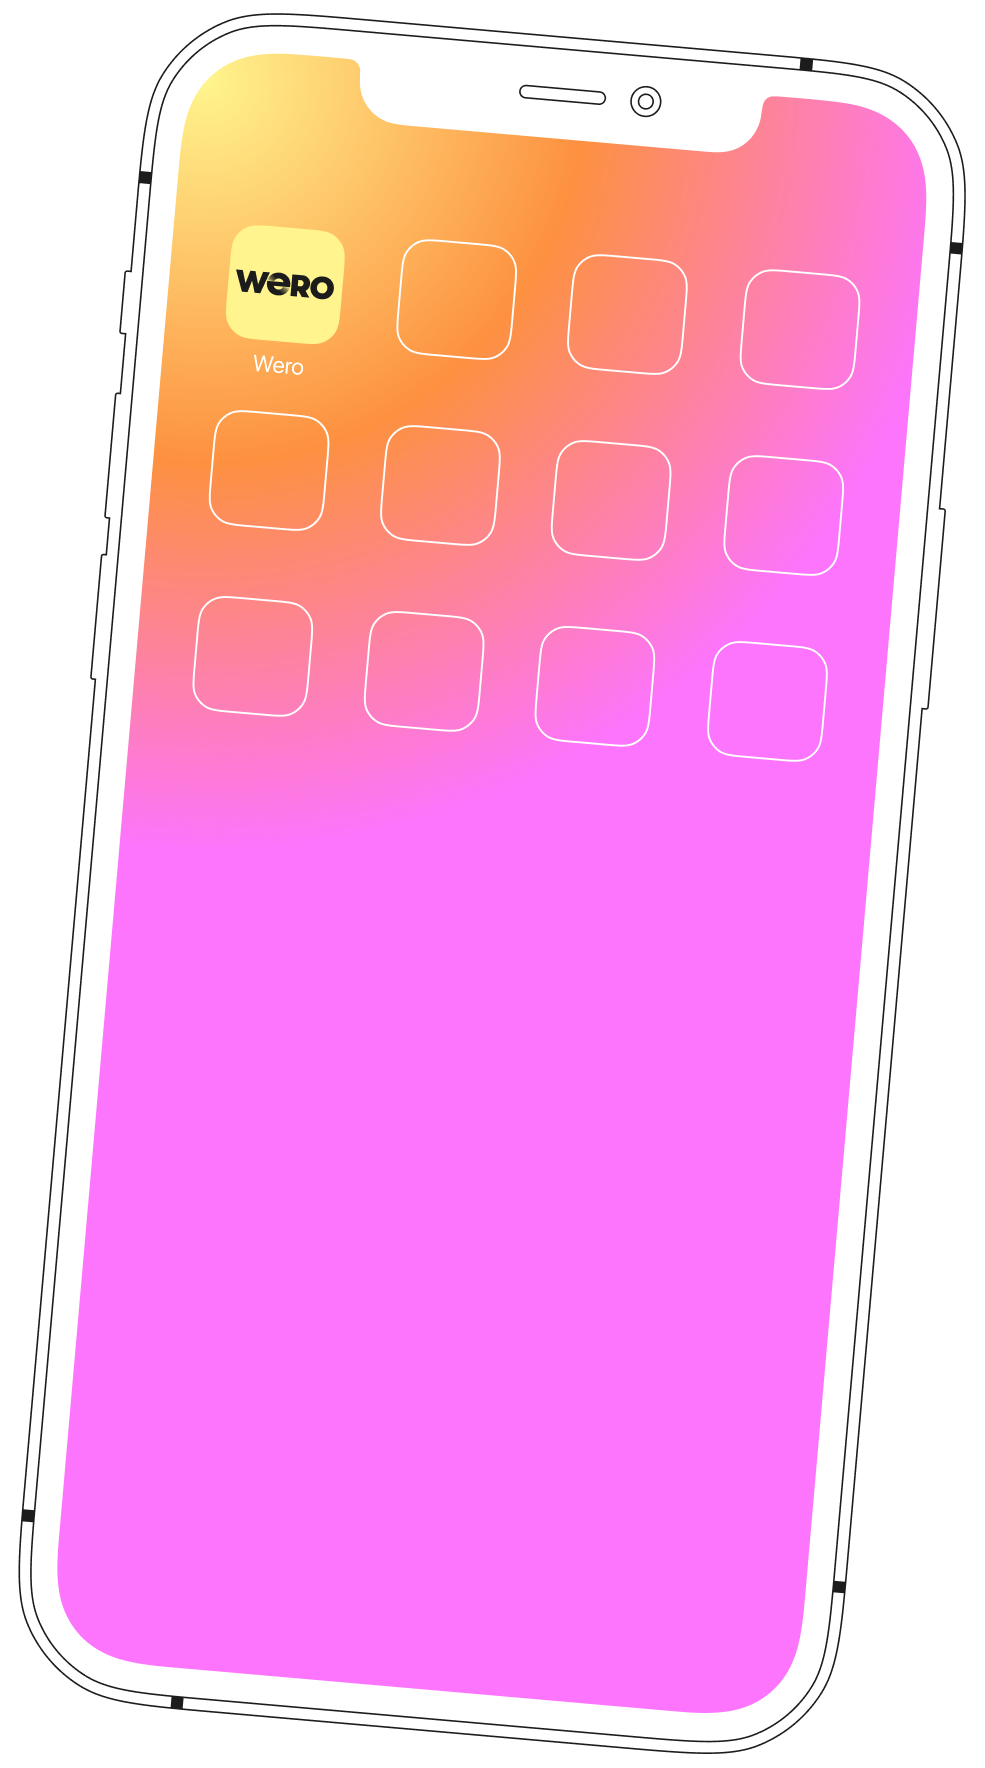 phone displaying the Wero app